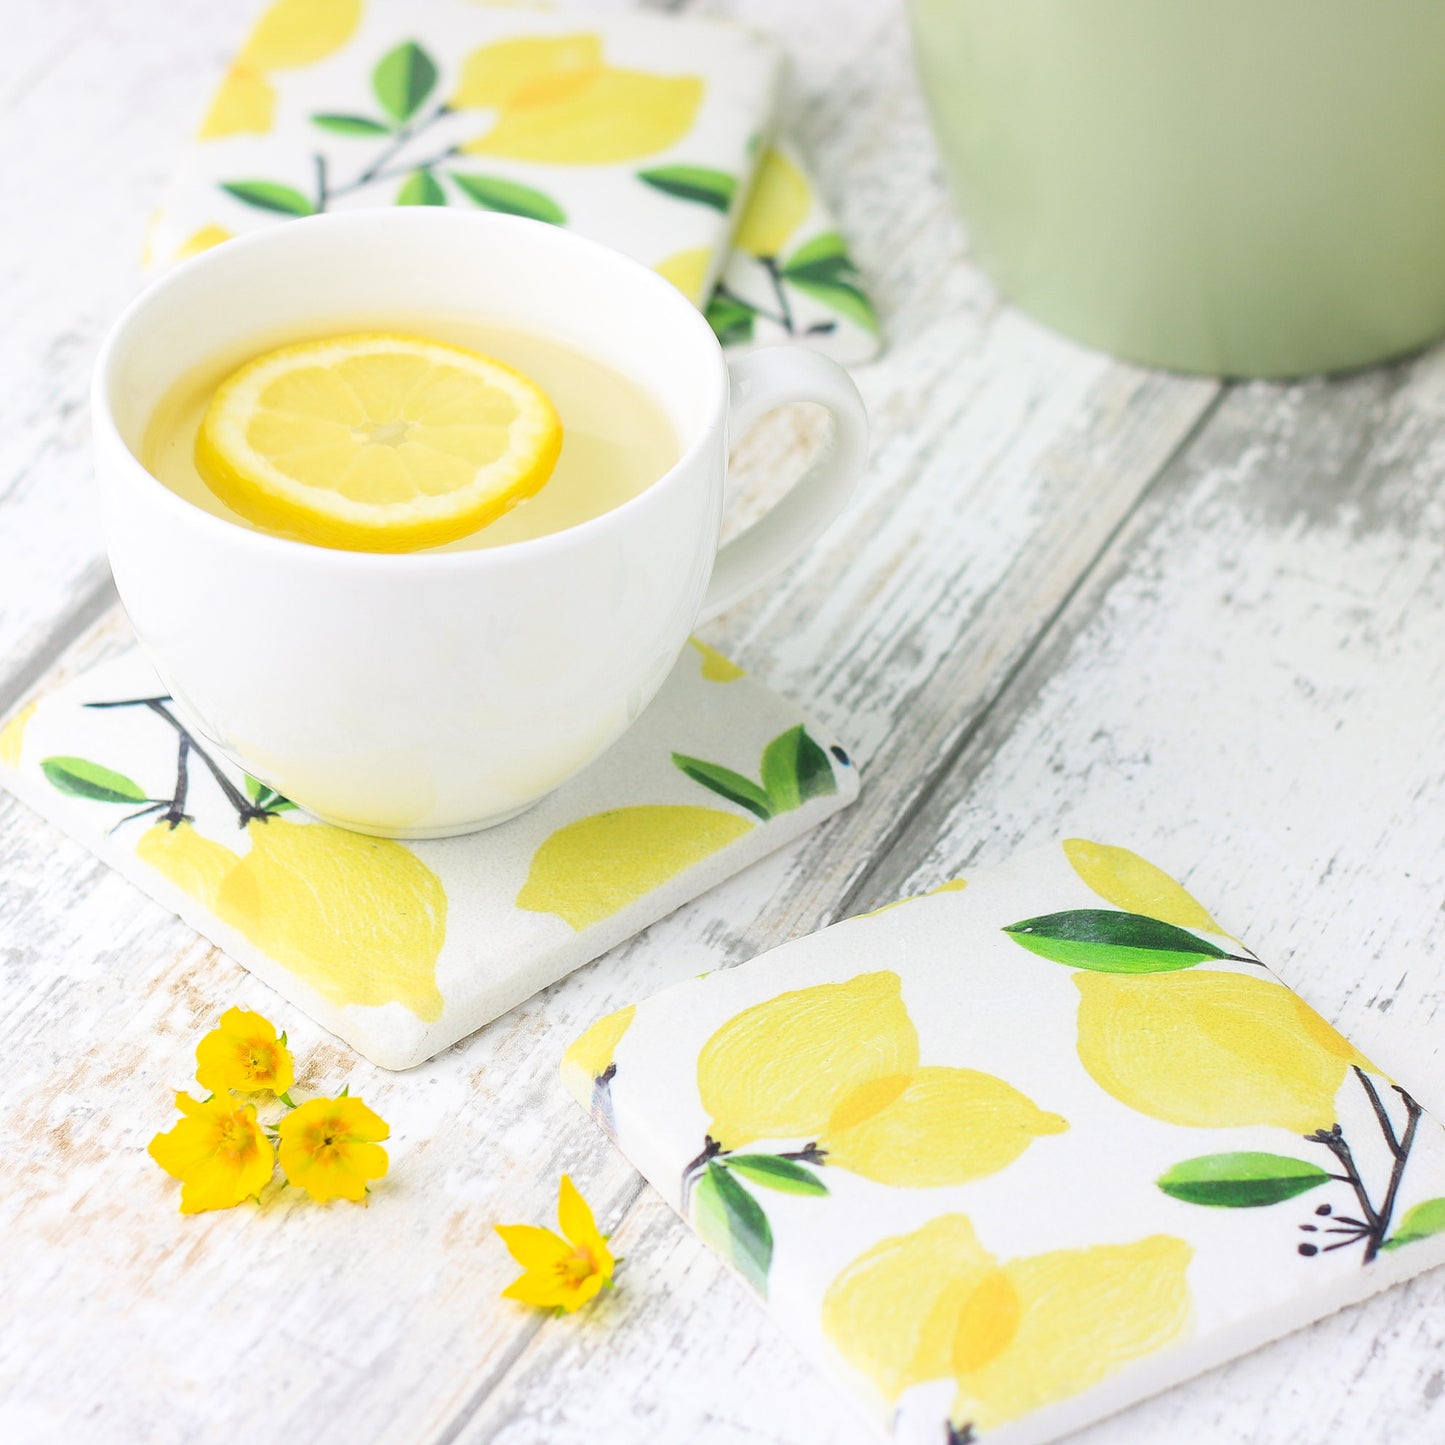 Italian Lemon Tree Coasters - Set of Four